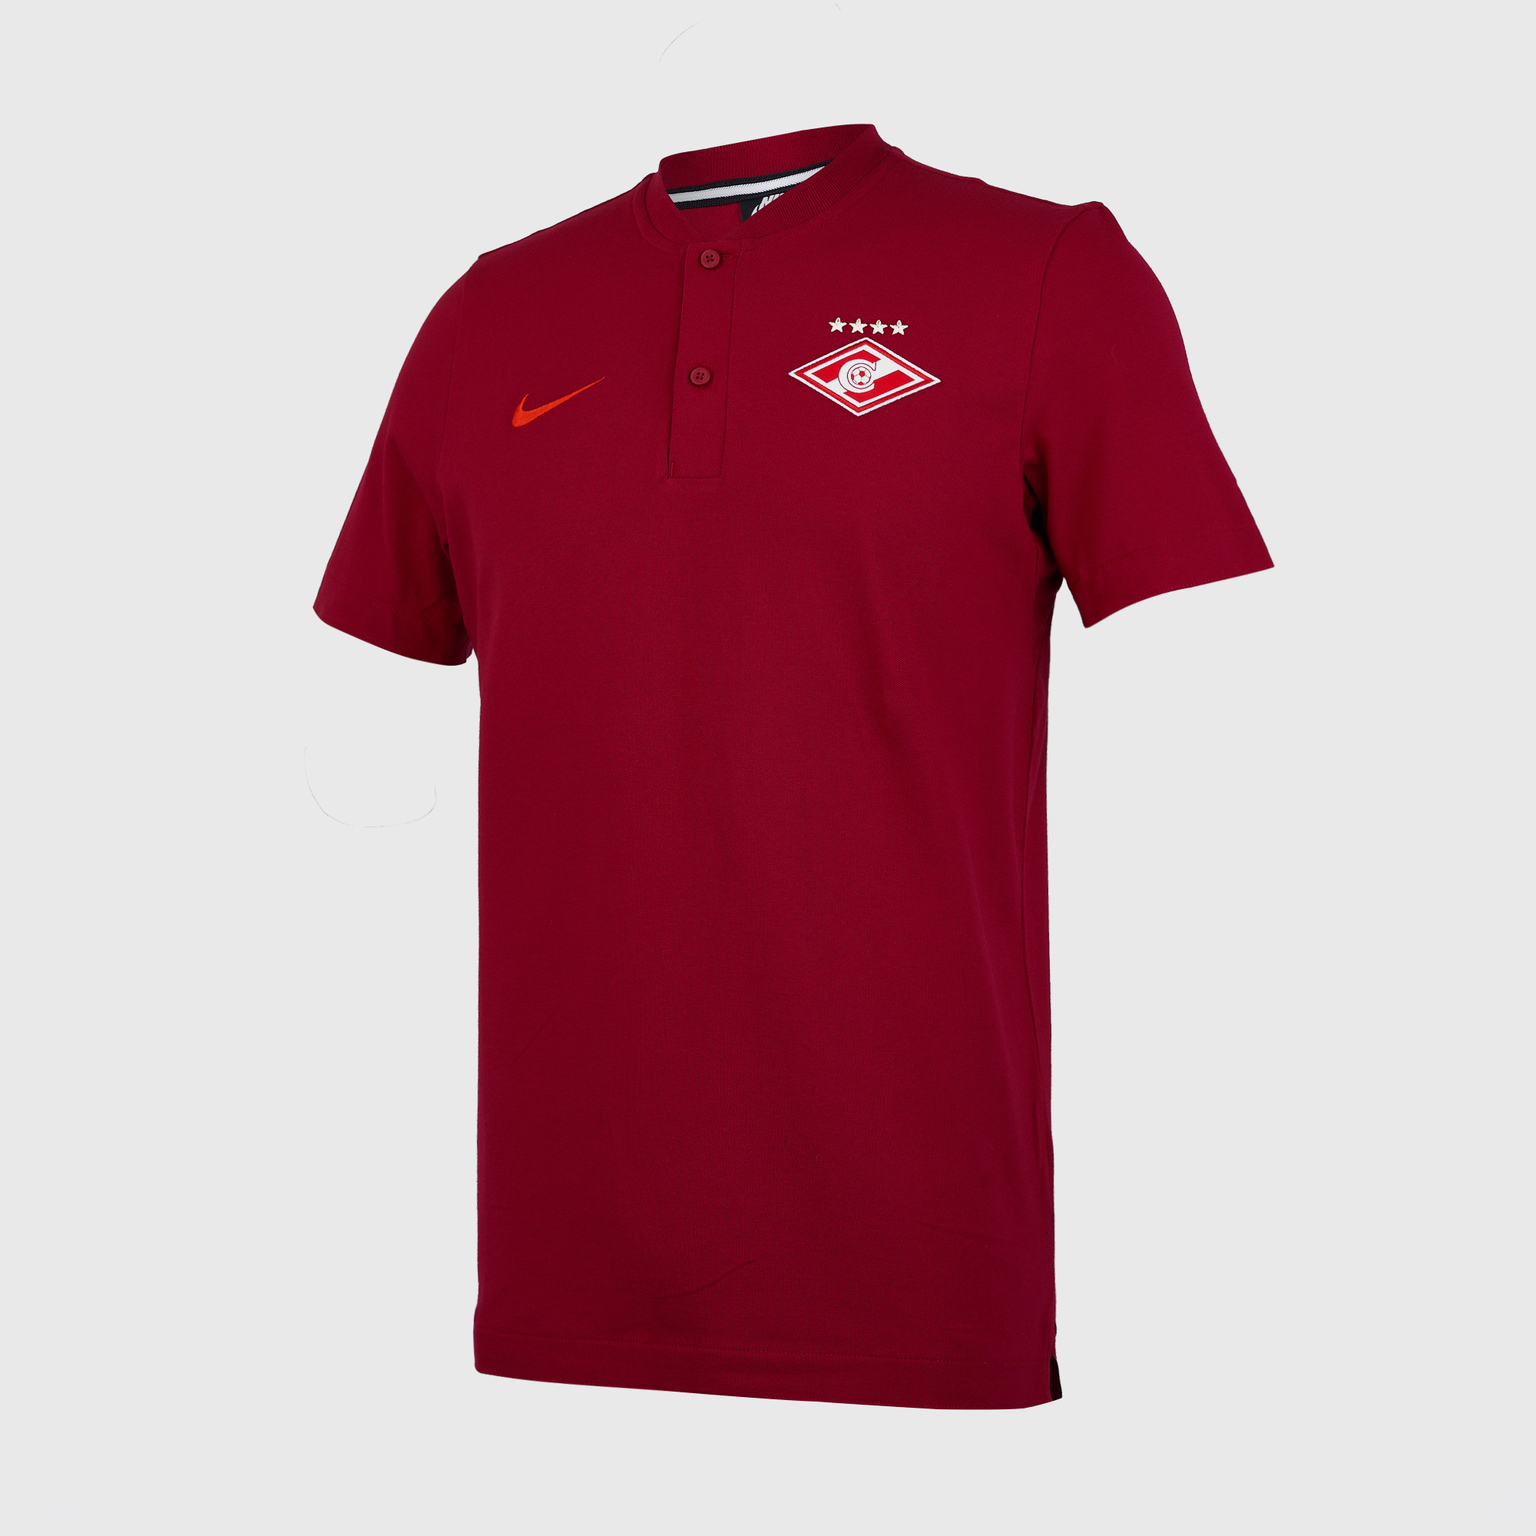 Поло Nike Spartak Modern сезон 2020/21